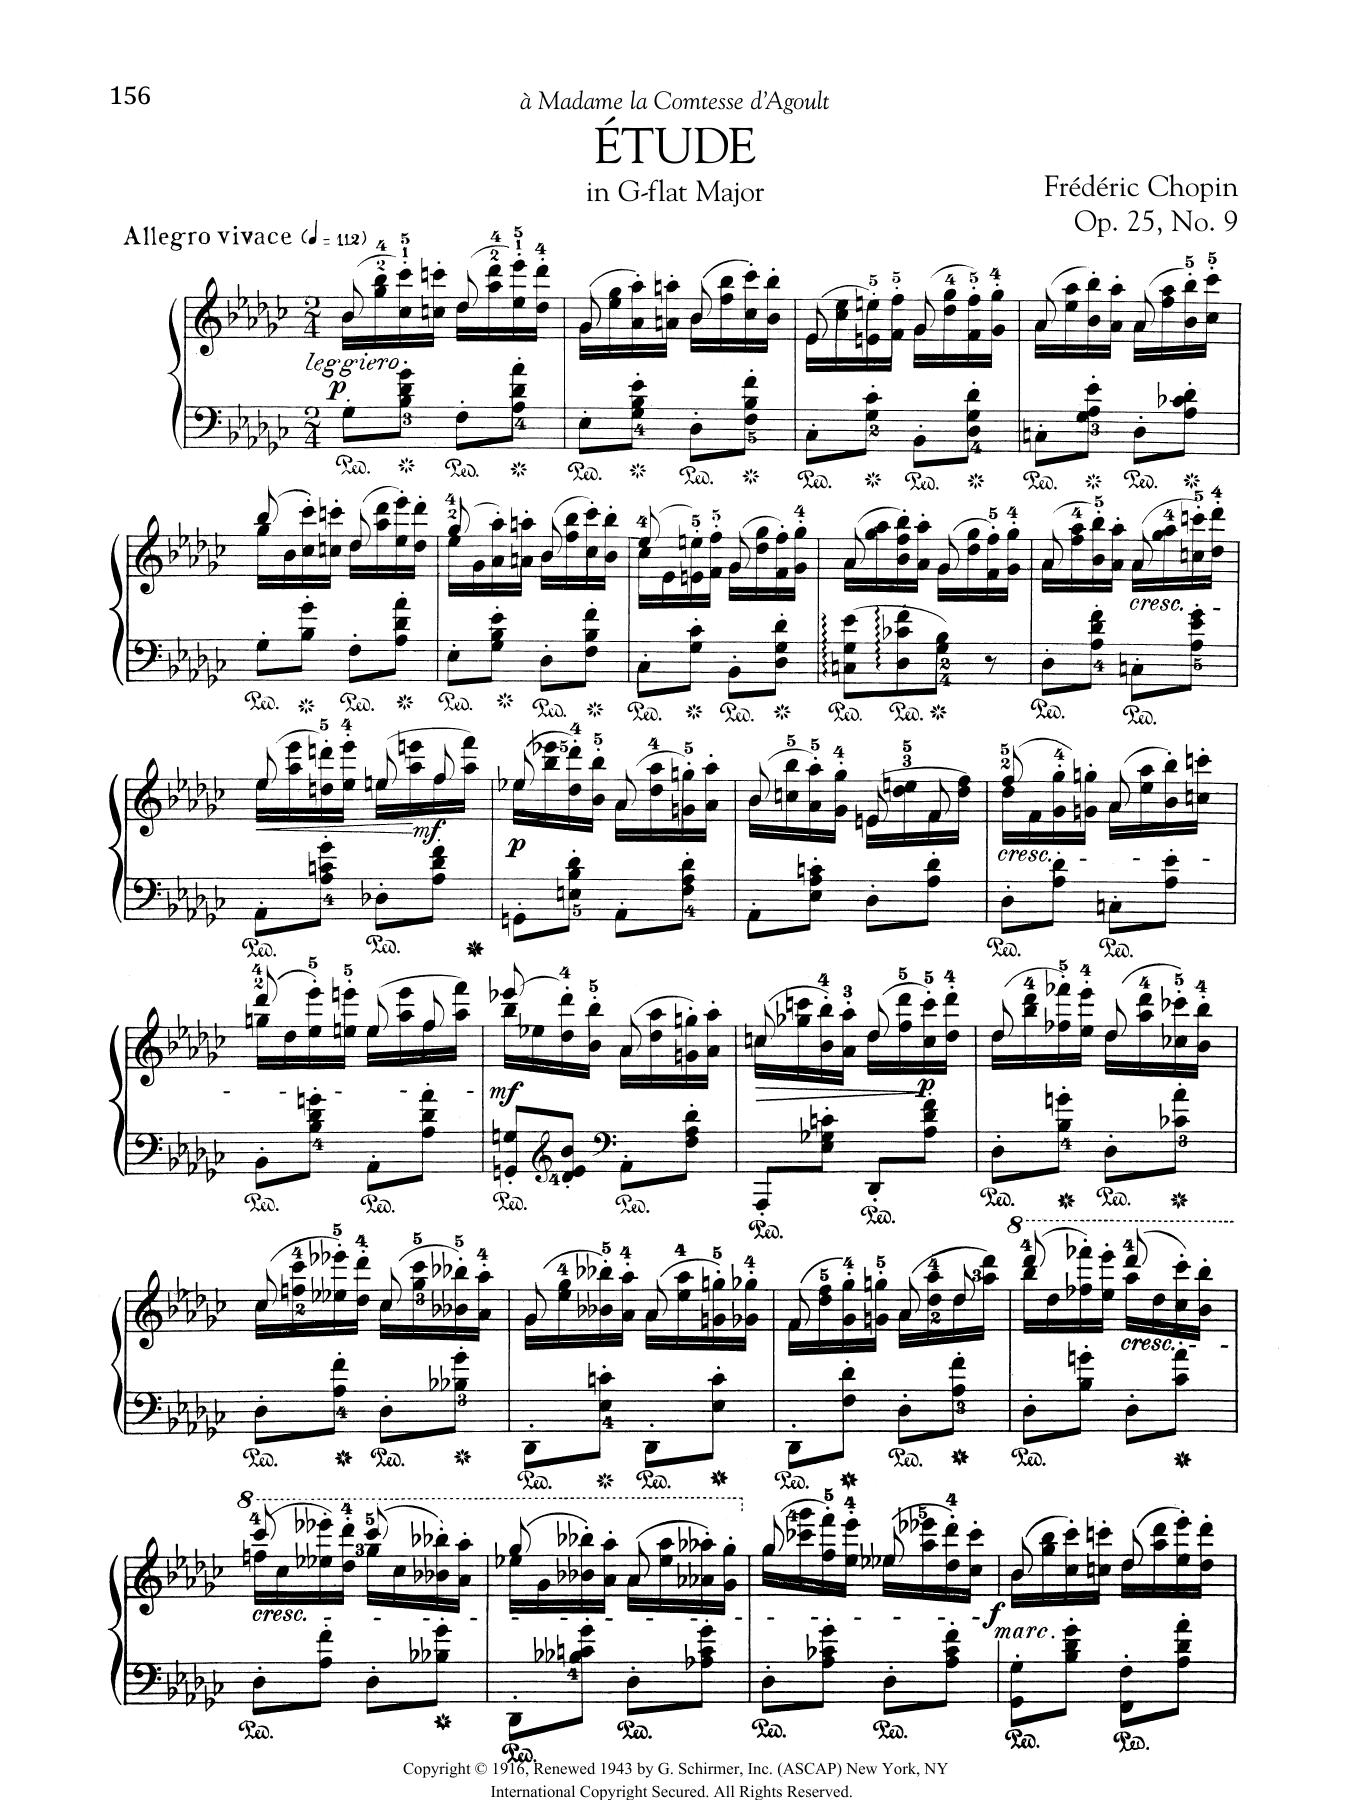 Etude in G-flat Major, Op. 25, No. 9 sheet music